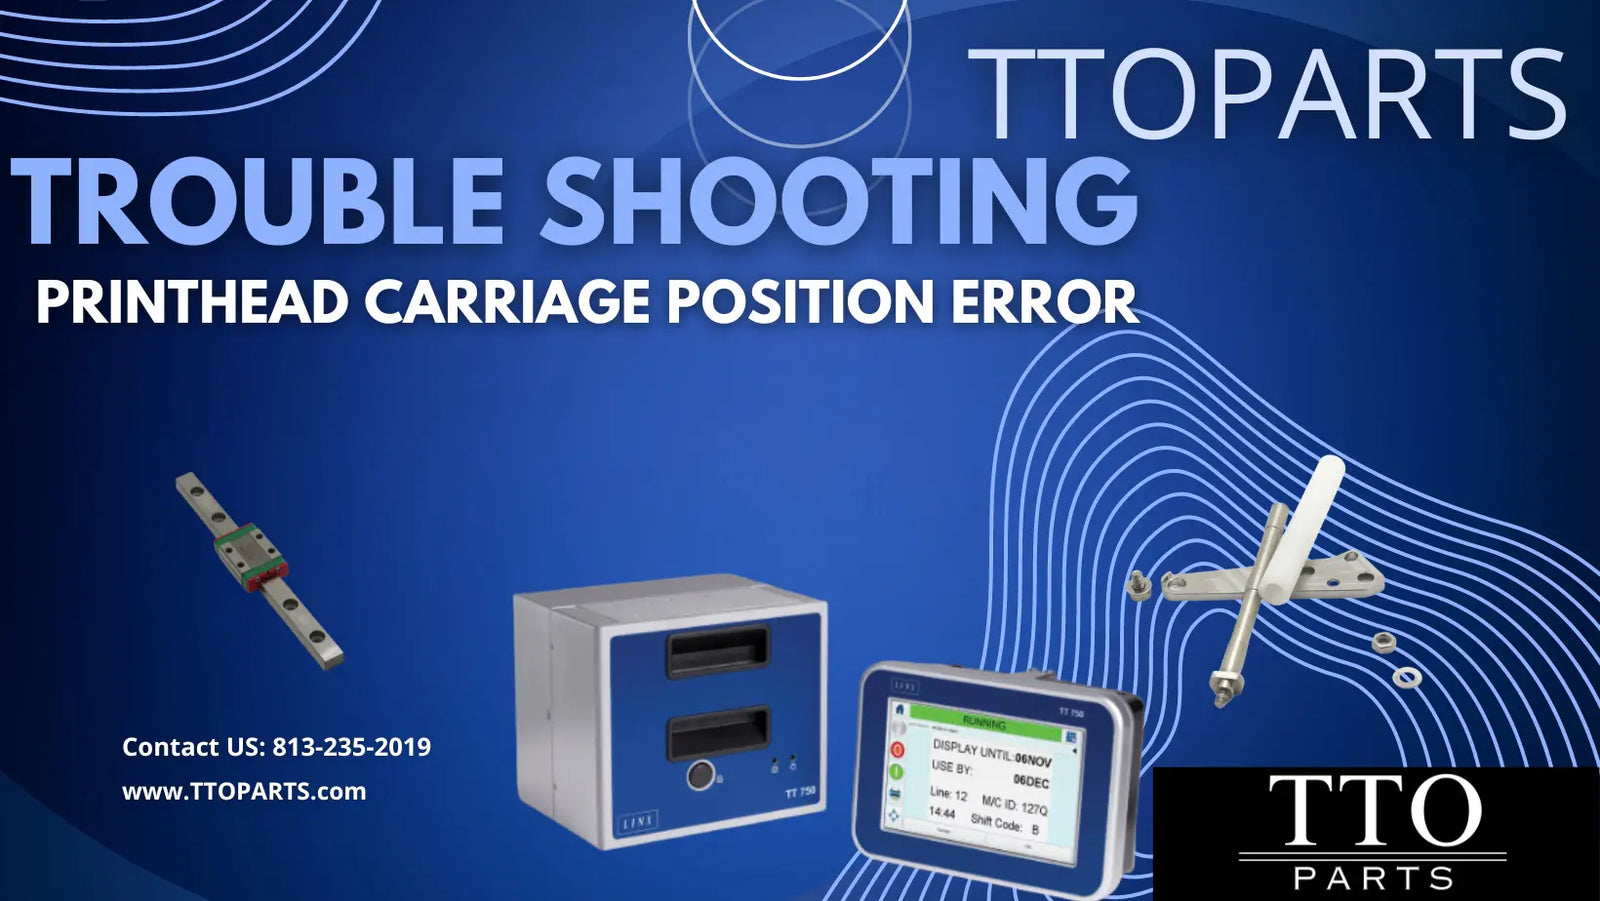 TTOParts Videojet 6530 printhead carriage position error